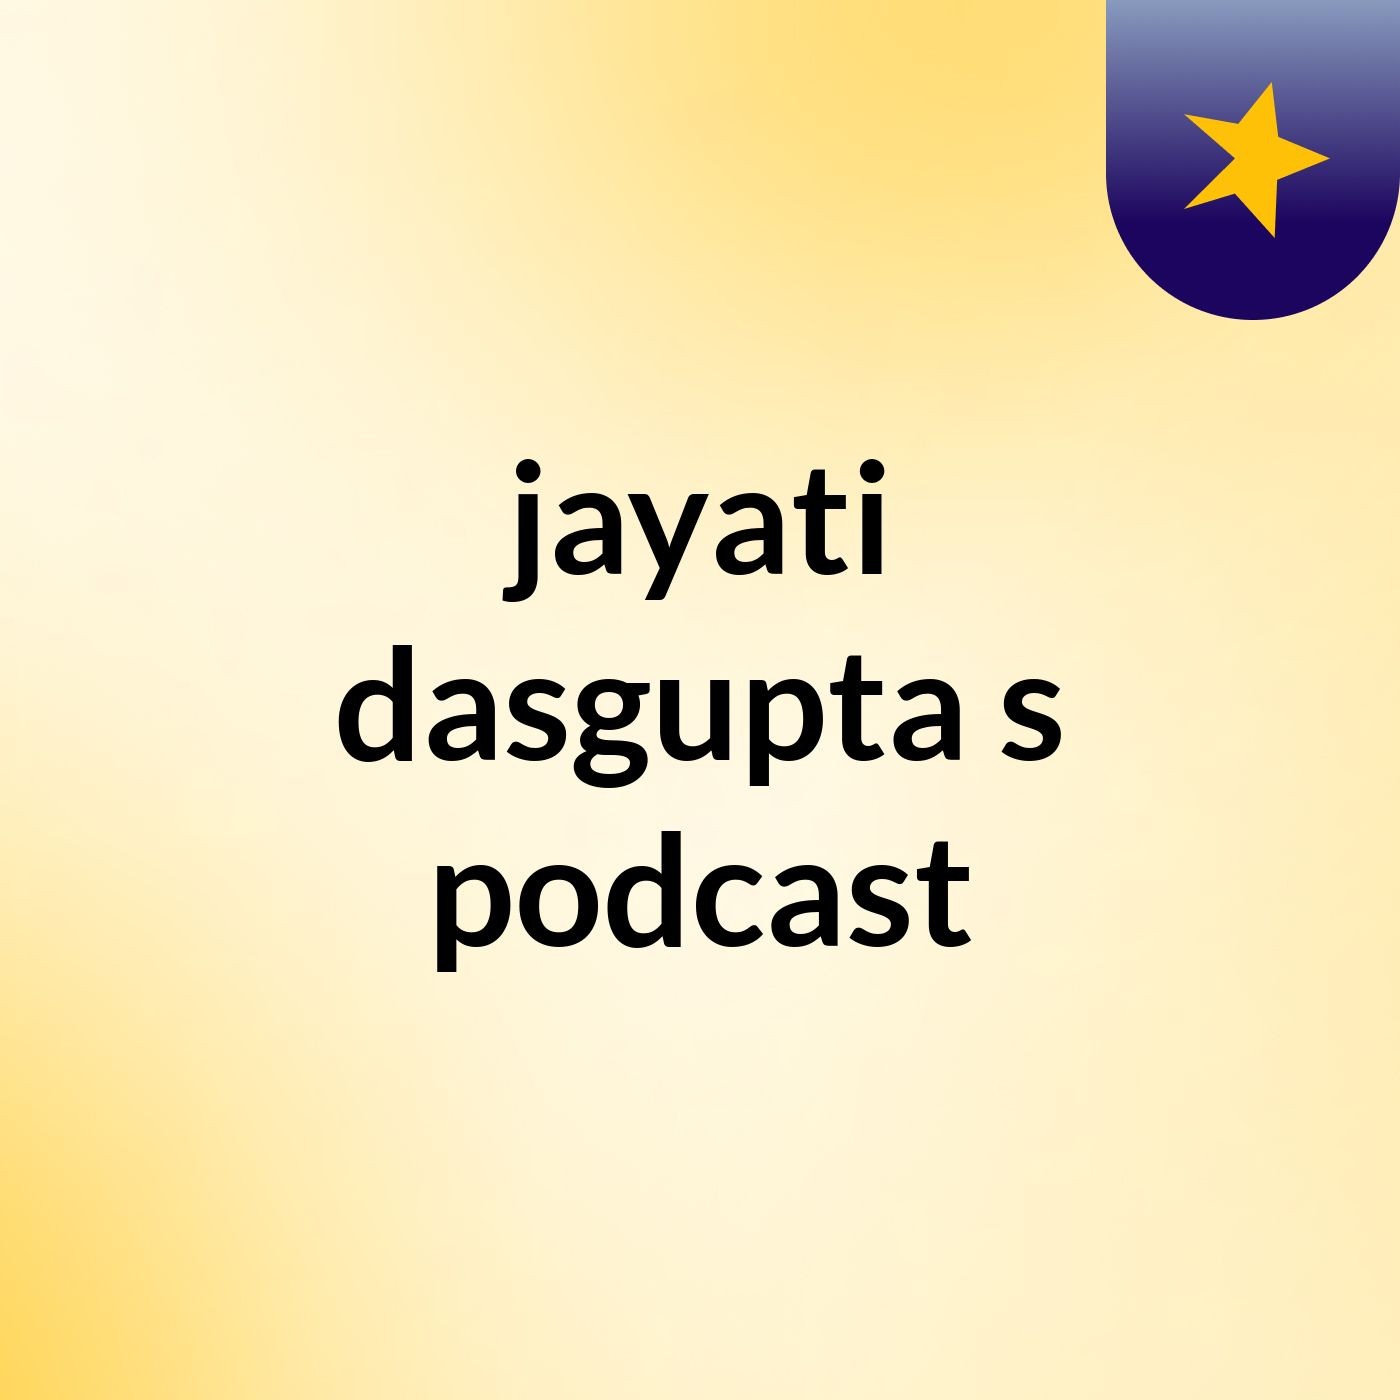 jayati dasgupta's podcast